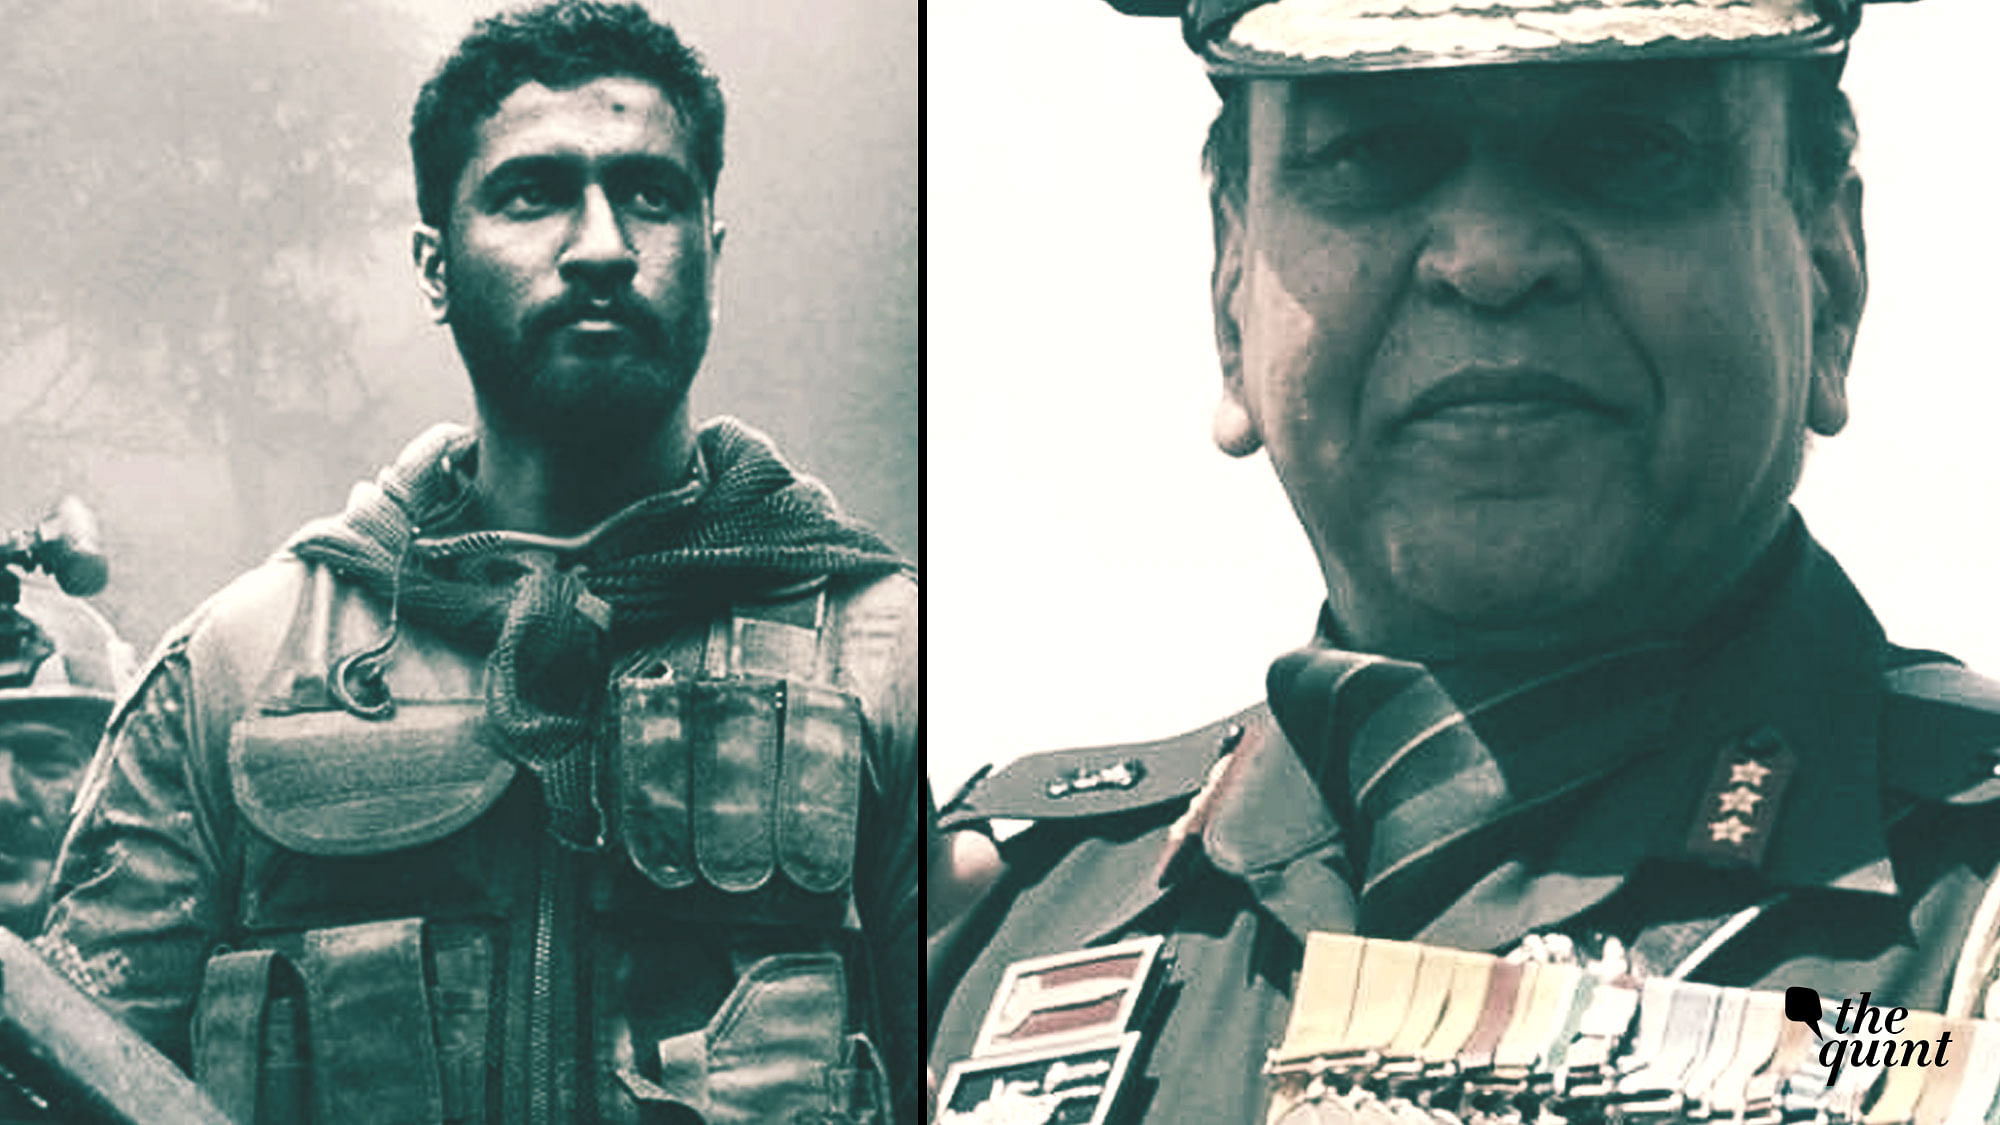 Image of ‘Uri’ film poster (L), and ex Uri Brigade Commander Syed Ata Hasnain (R), used for representational purposes.